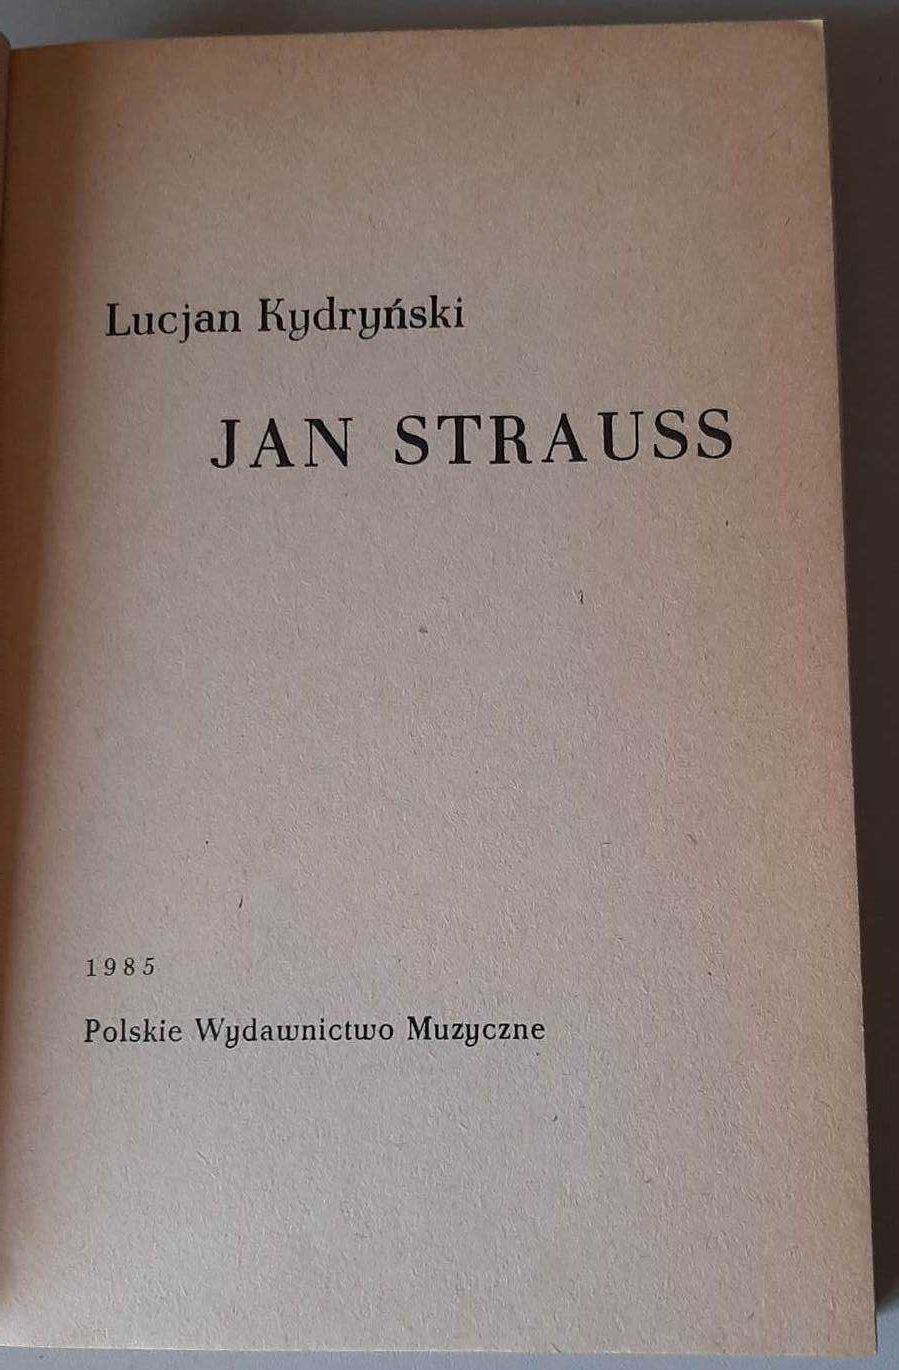 J. Strauss - Lucjan Kydryński